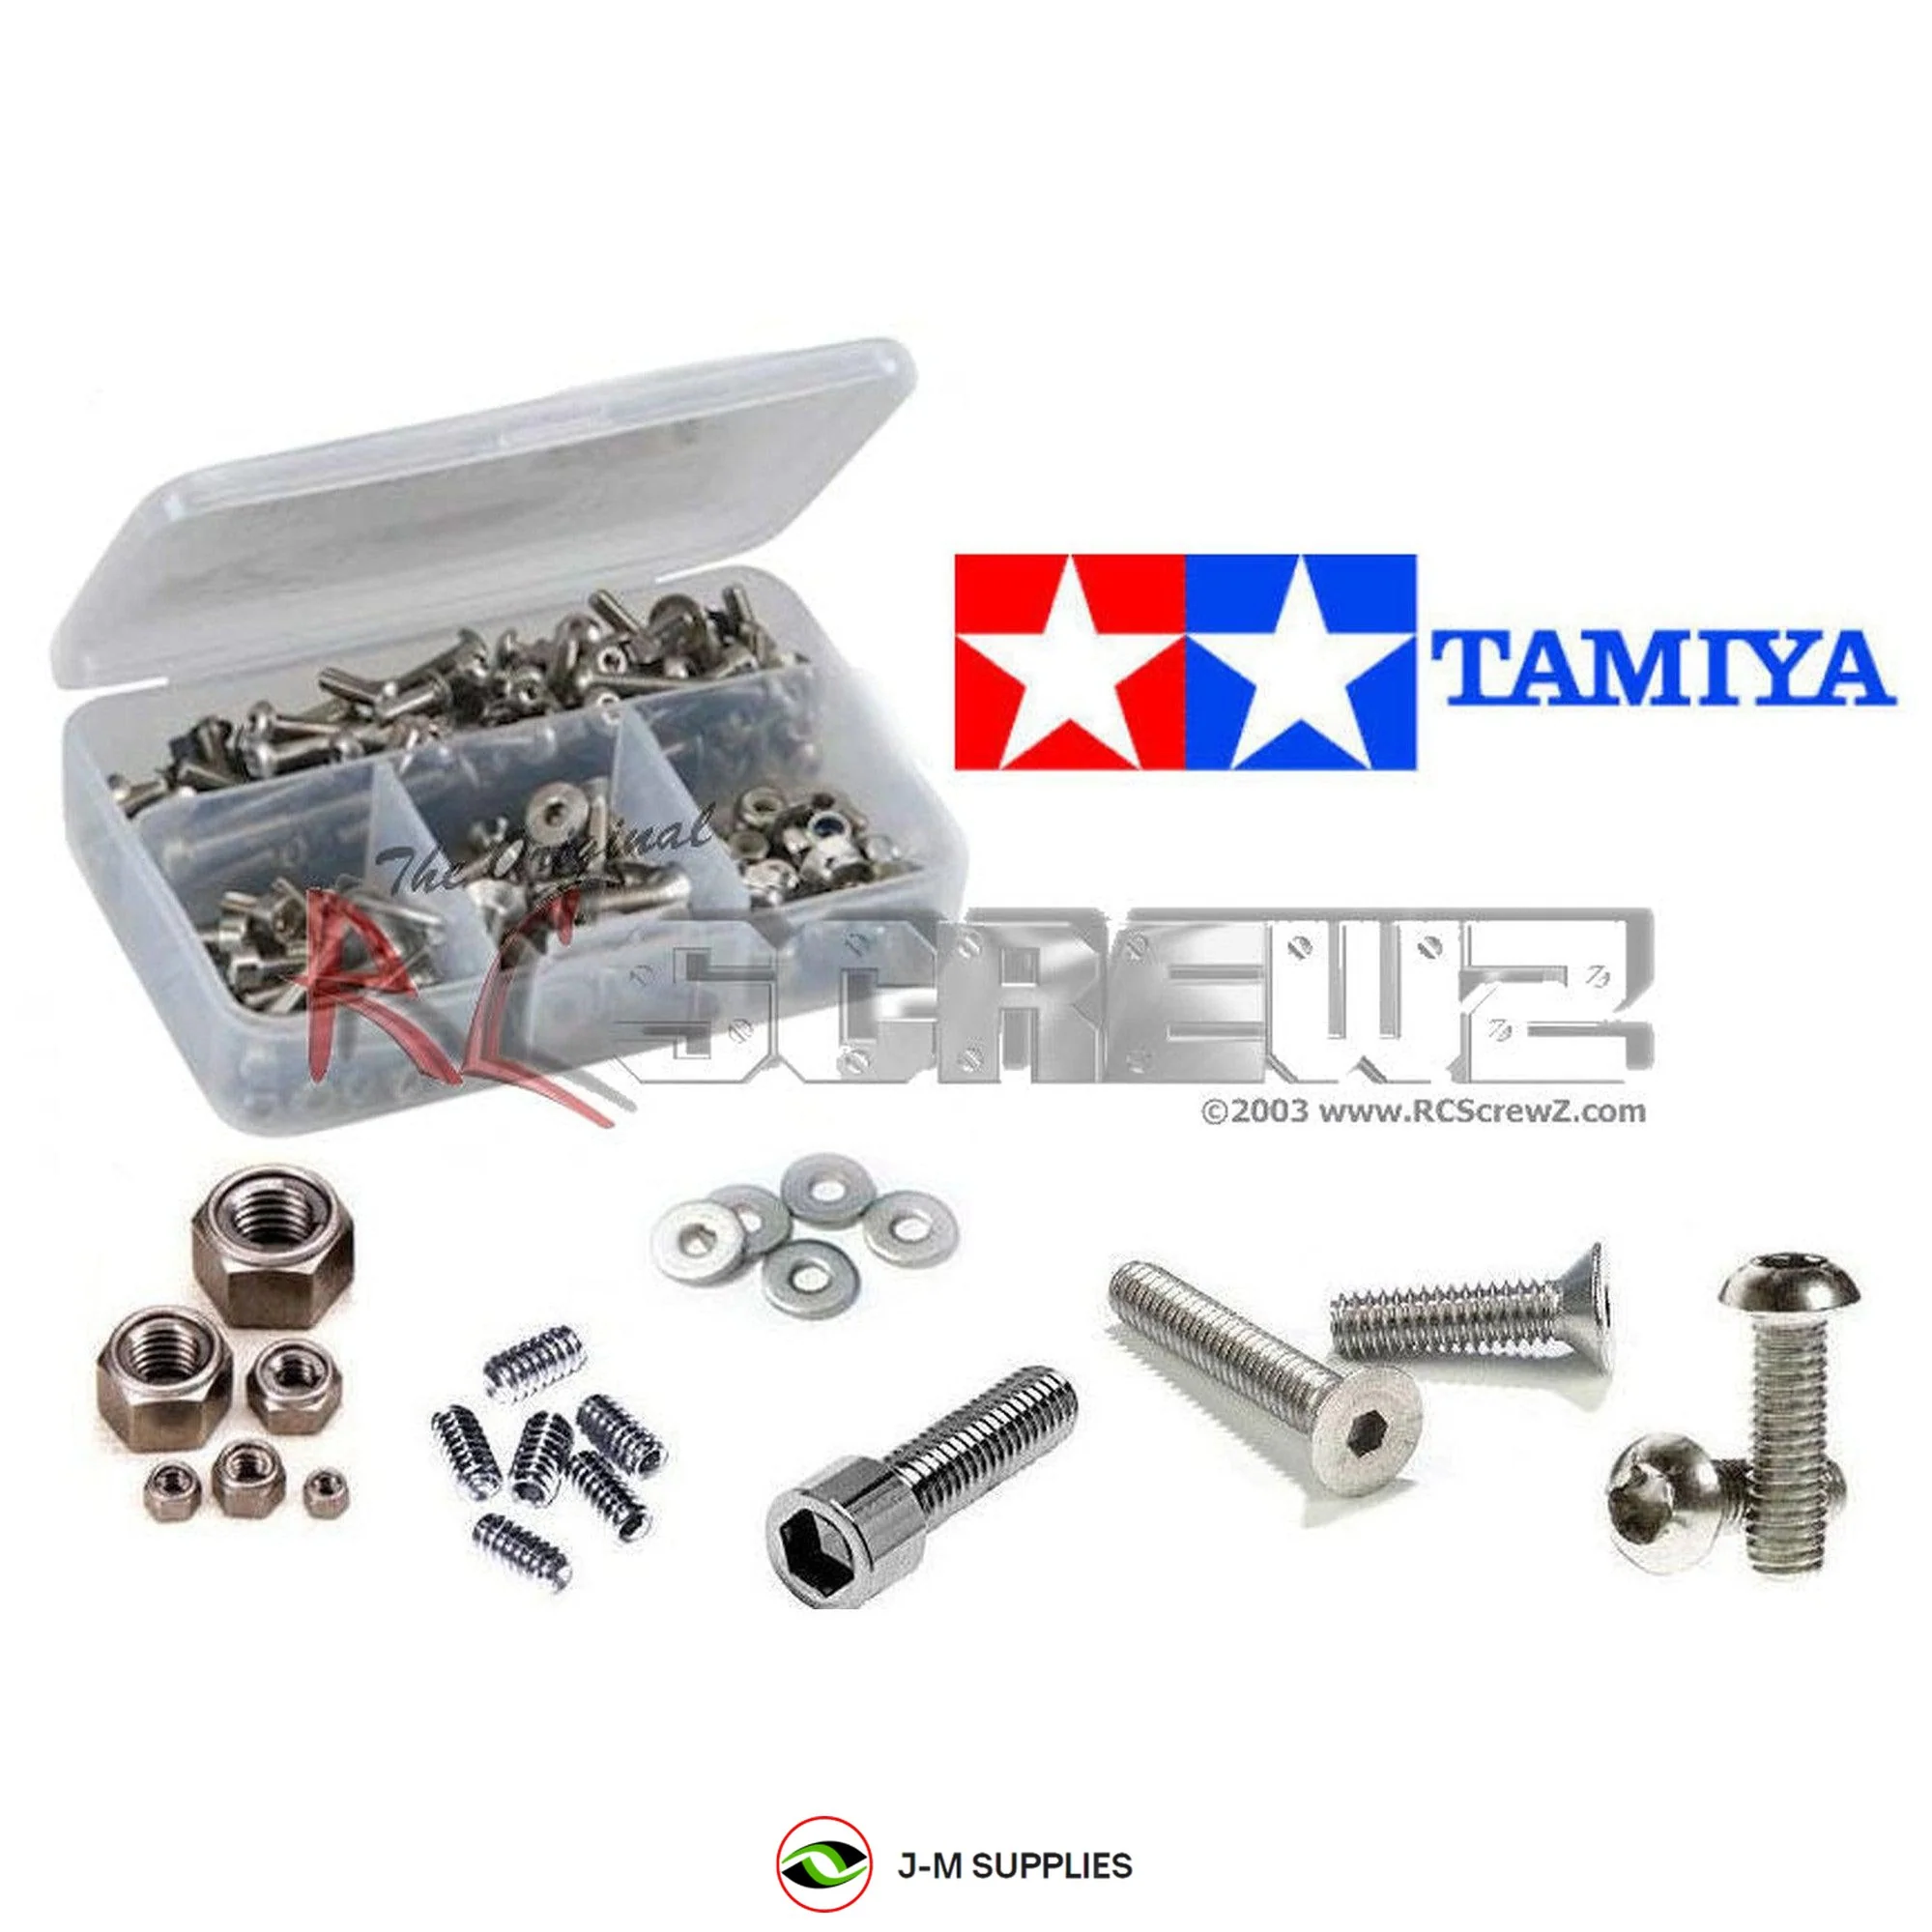 RCScrewZ Stainless Steel Screw Kit tam069 for Tamiya Ferrari 412 TI - Picture 1 of 12